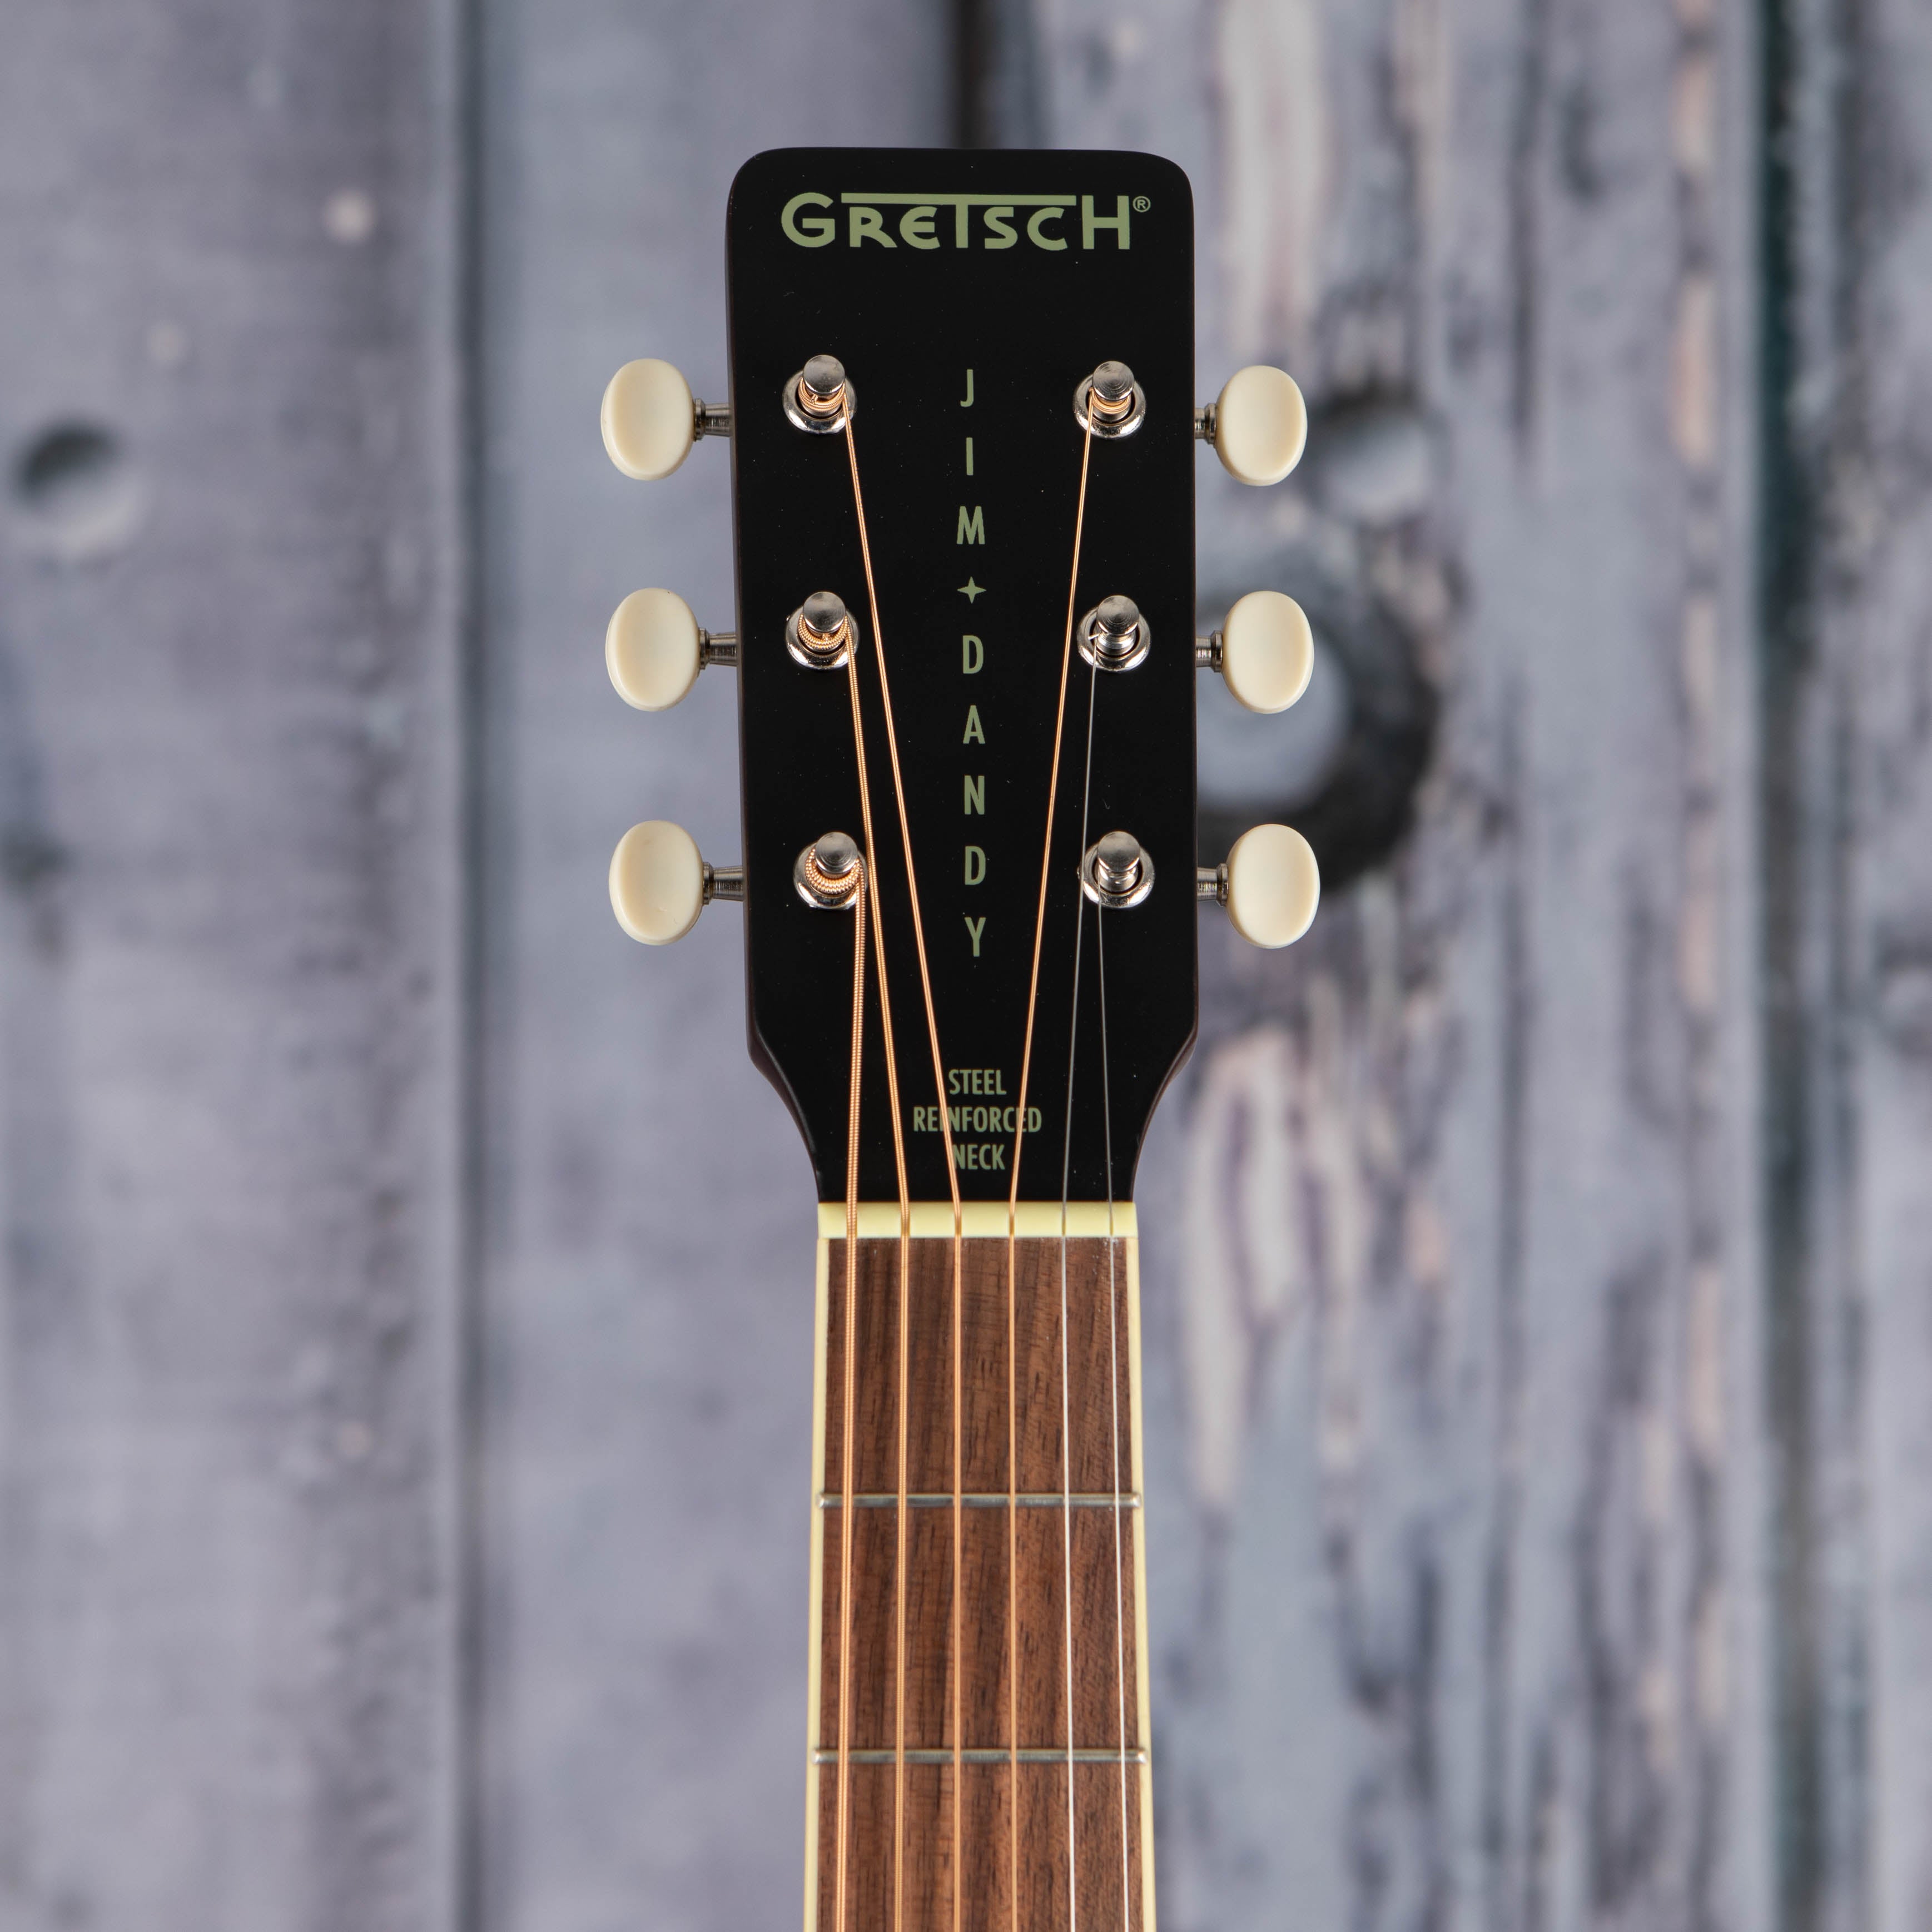 Gretsch Jim Dandy Dreadnought Acoustic Guitar, Rex Burst, front headstock